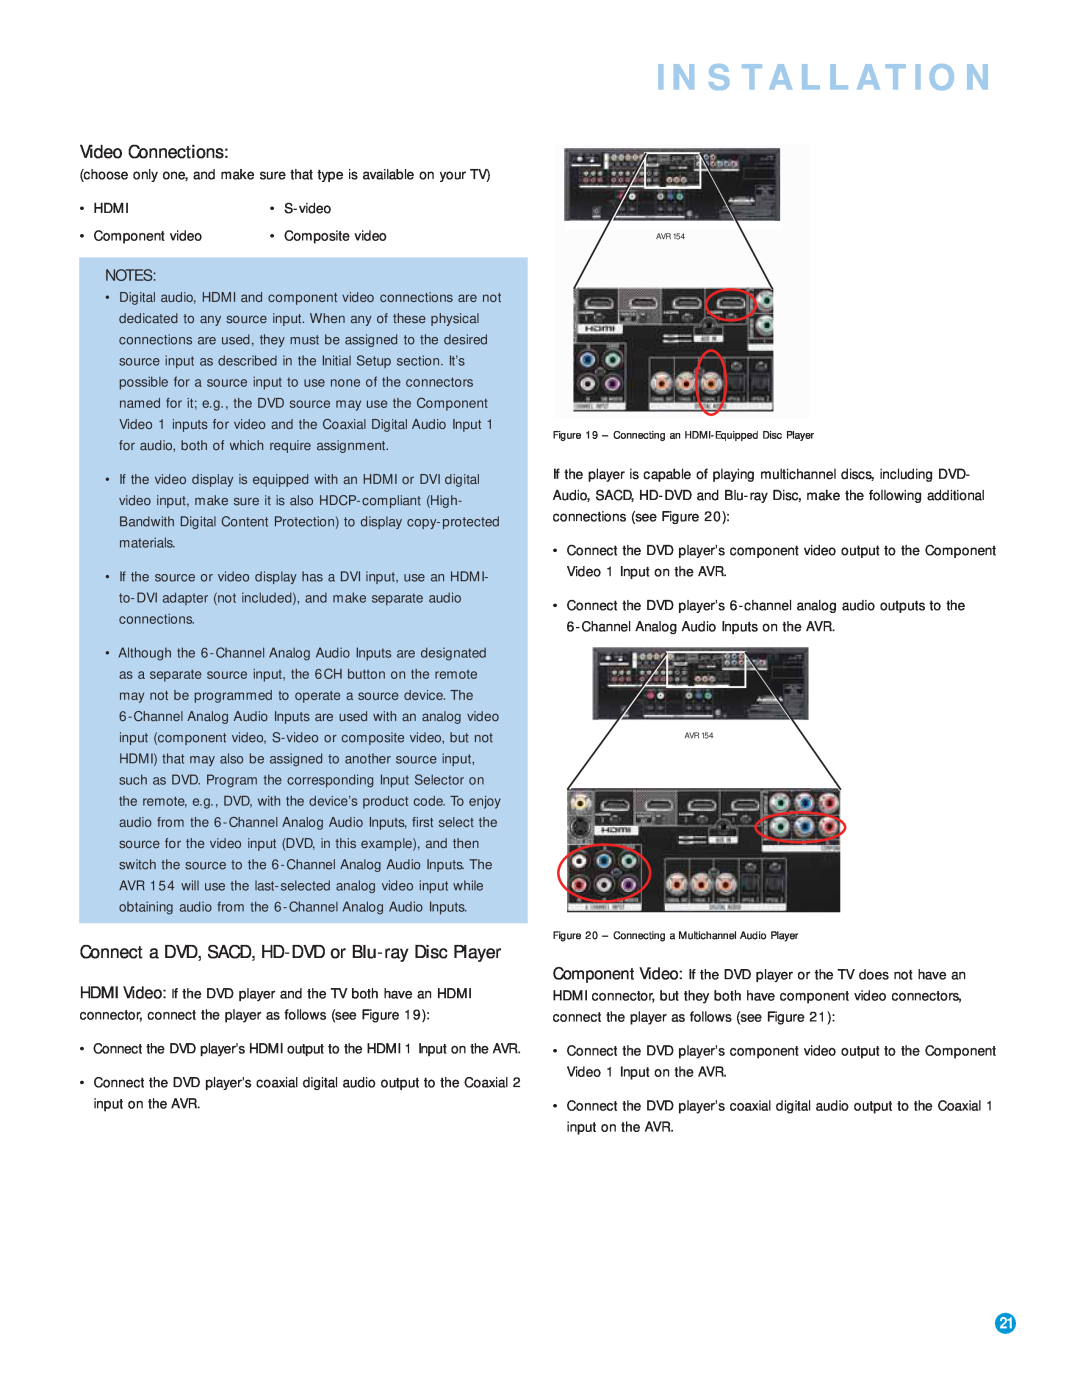 Harman-Kardon AVR 154 owner manual Installation, Video Connections, Hdmi 